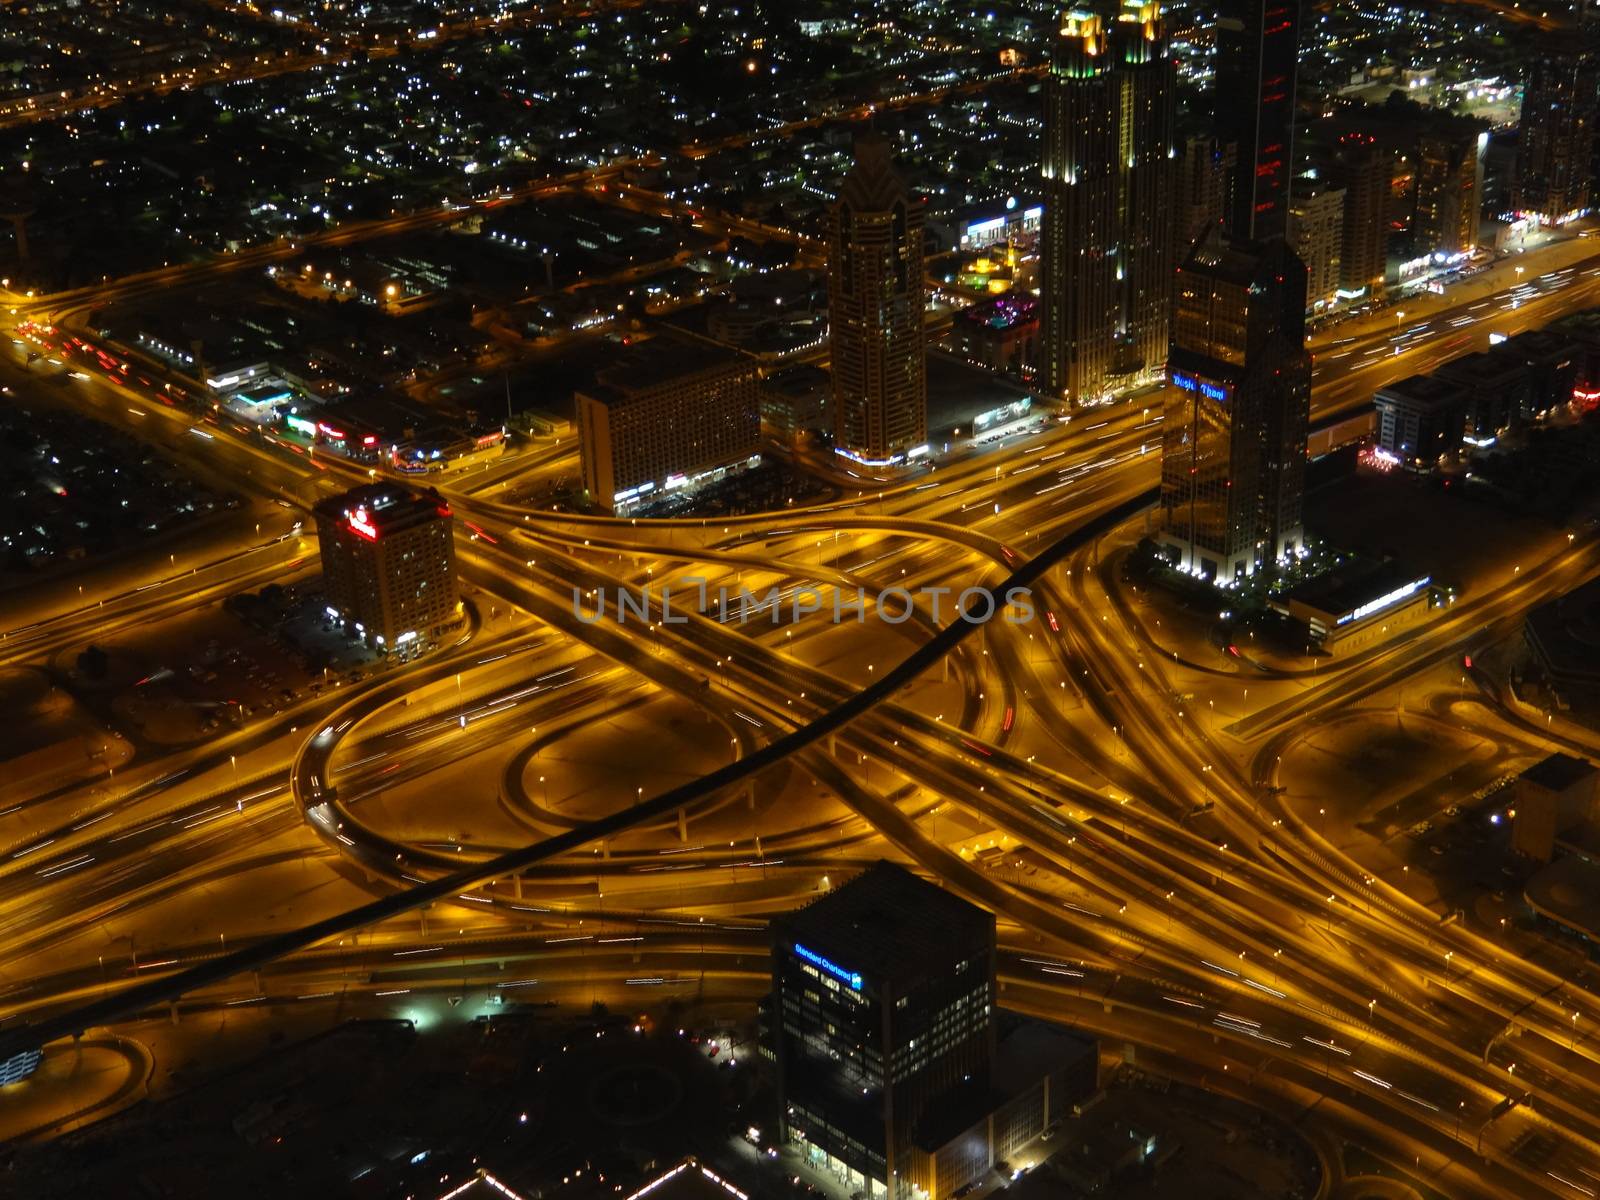 Dubai city during night by gswagh71